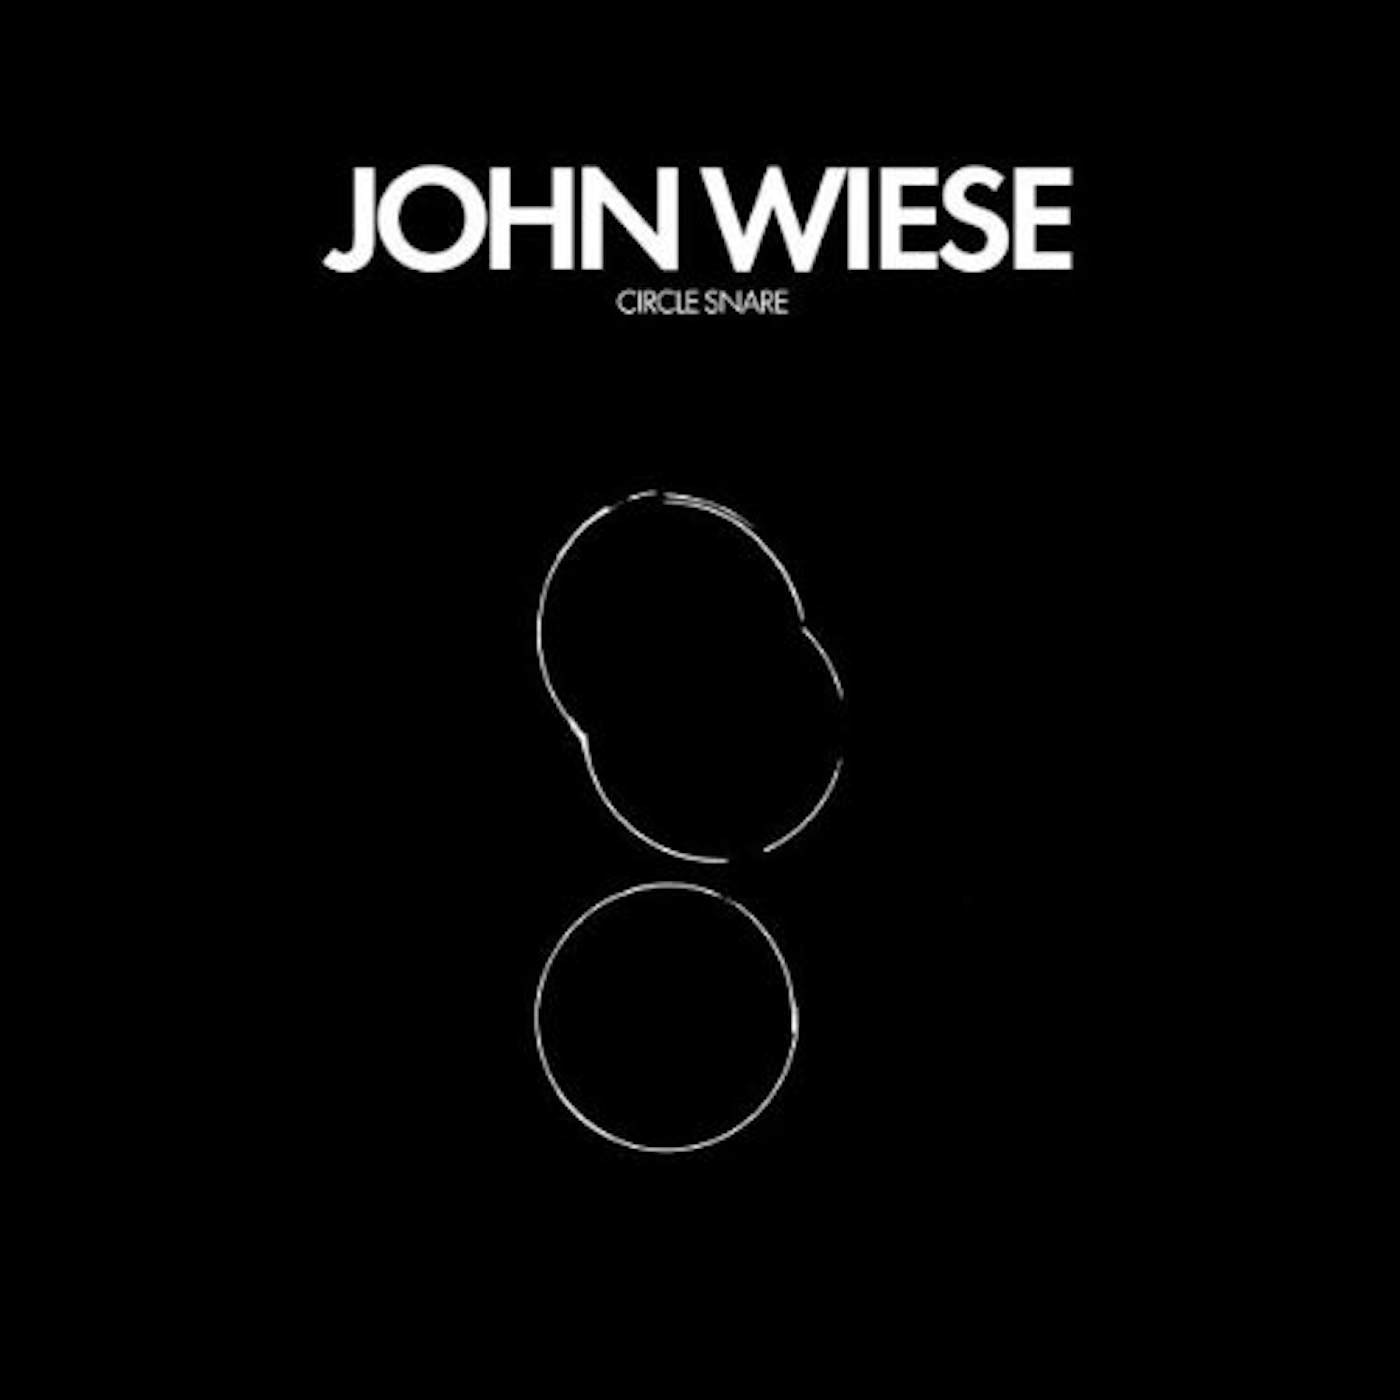 John Wiese Circle Snare Vinyl Record